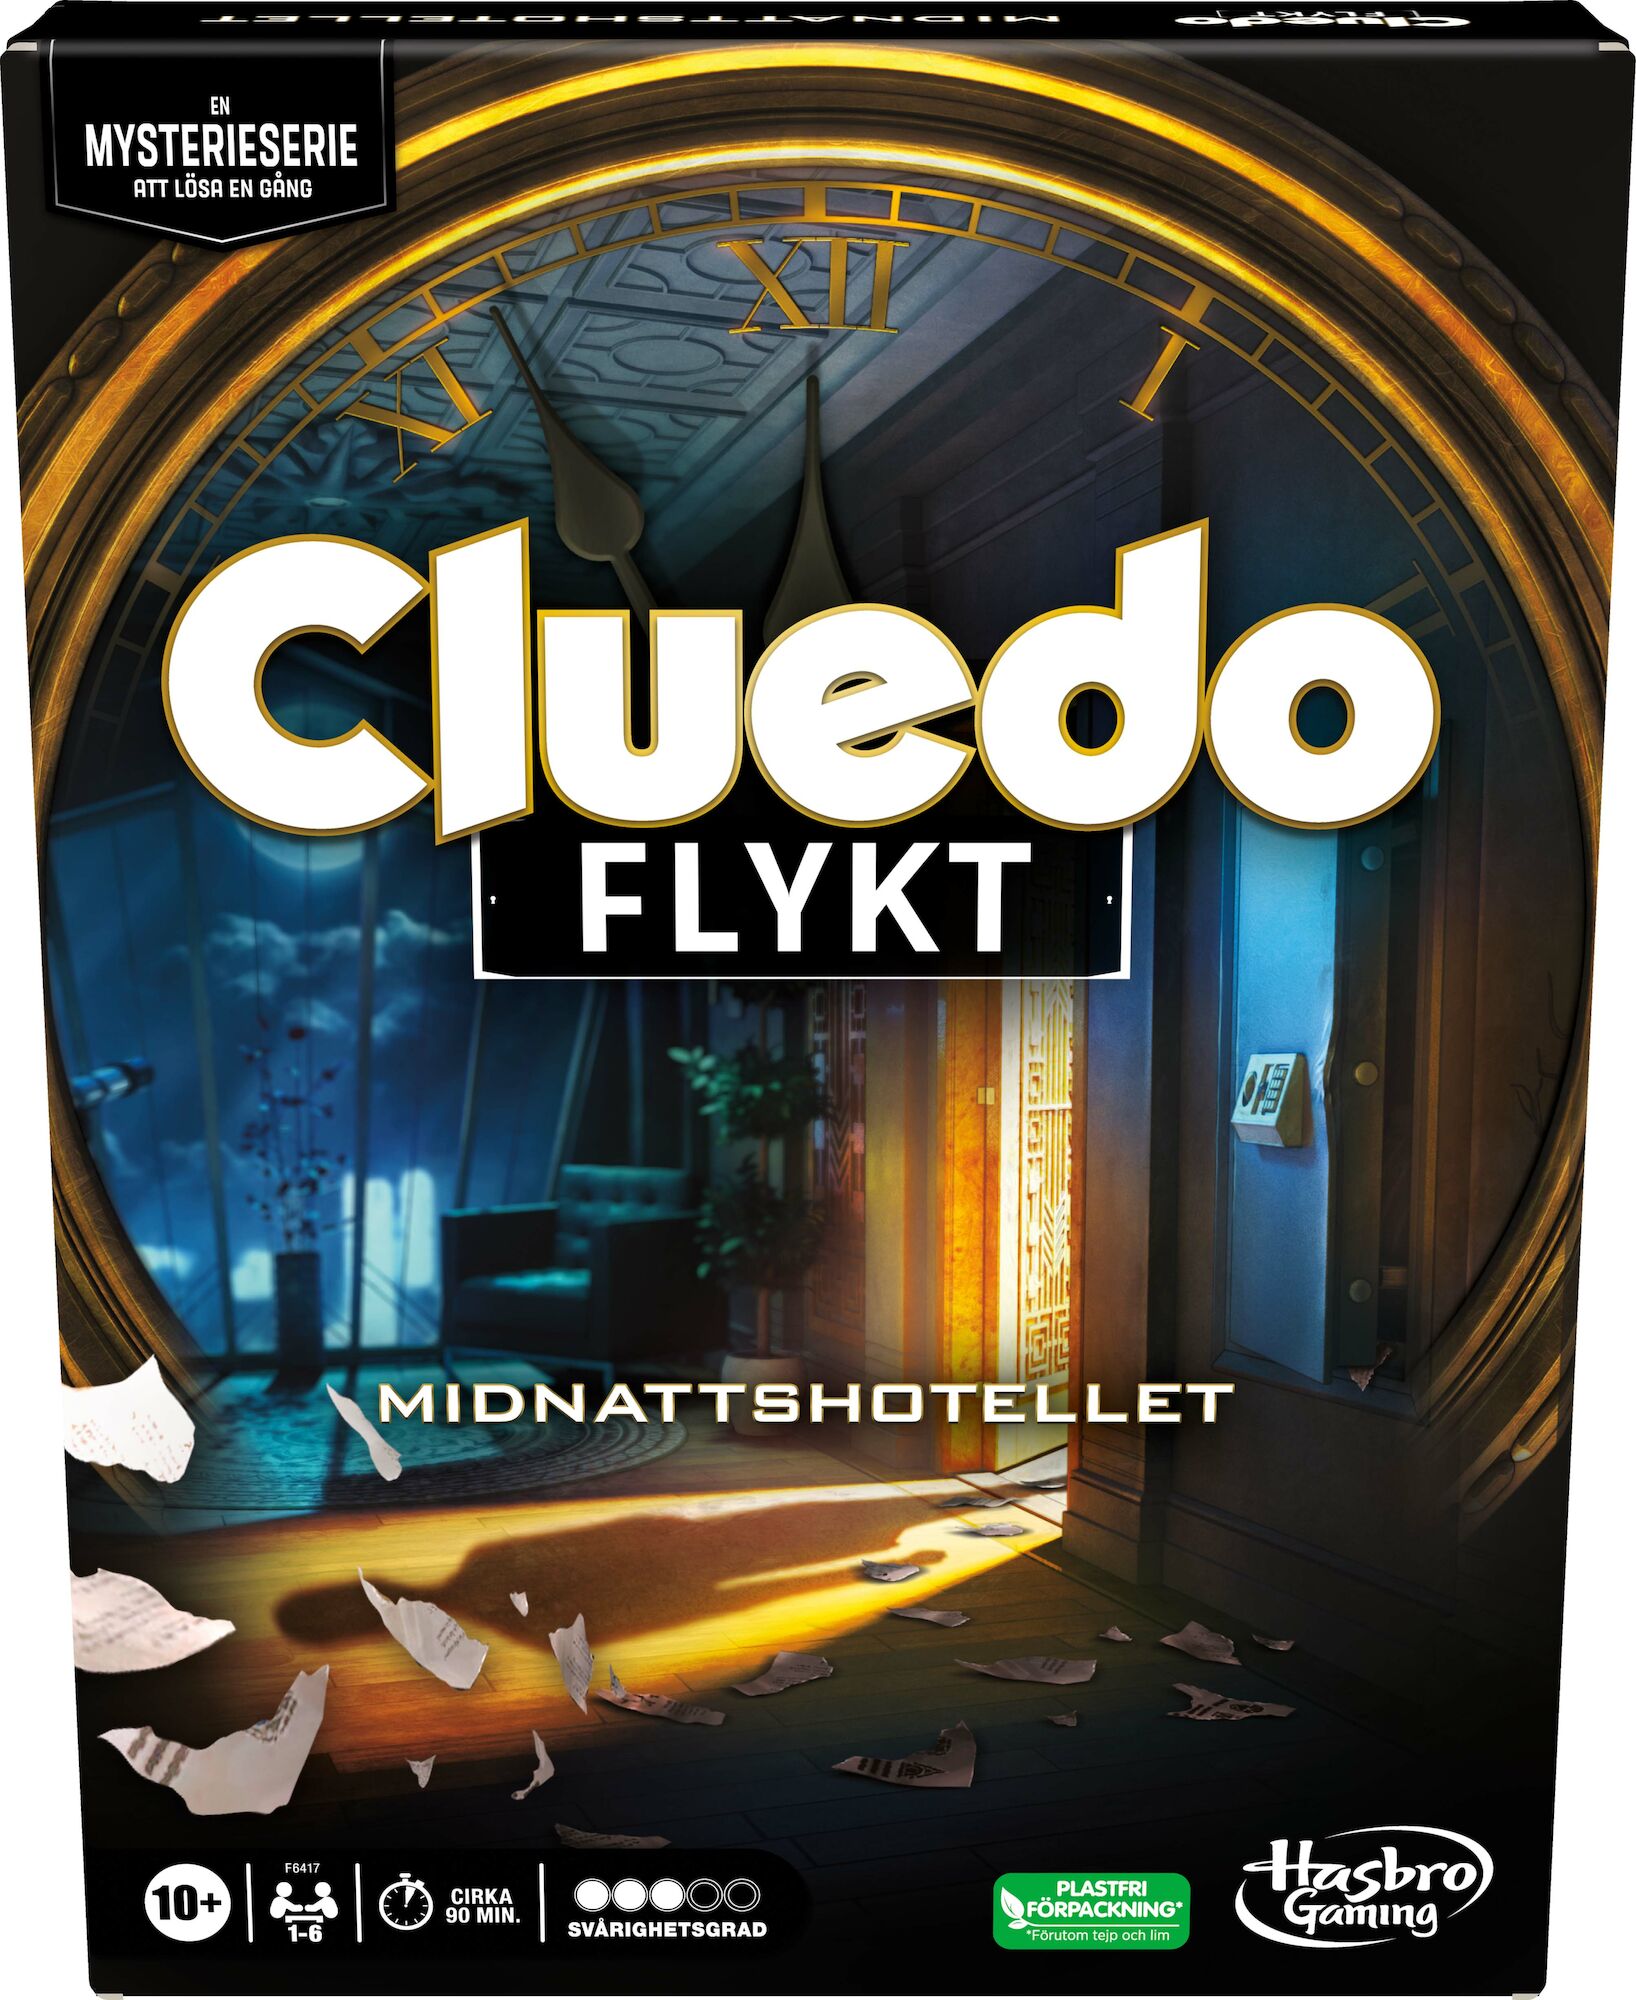 Hasbro Cluedo Flykt – Midnattshotellet